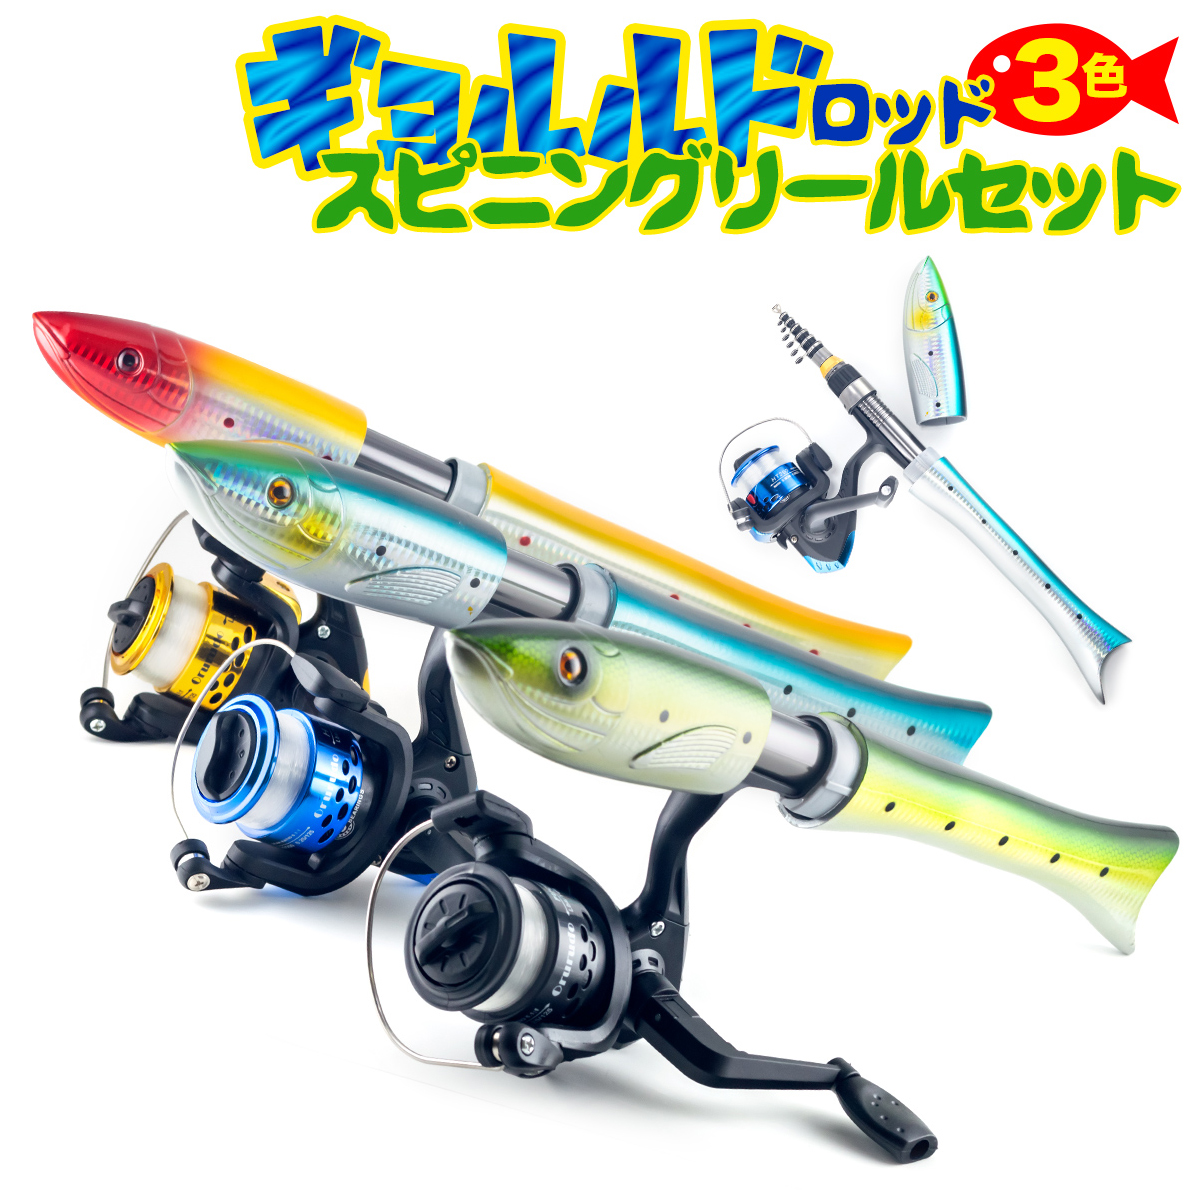  compact rod [gyo Lulu do] spinning reel set fish type ajing meba ring rod o Lulu do fishing gear free shipping 